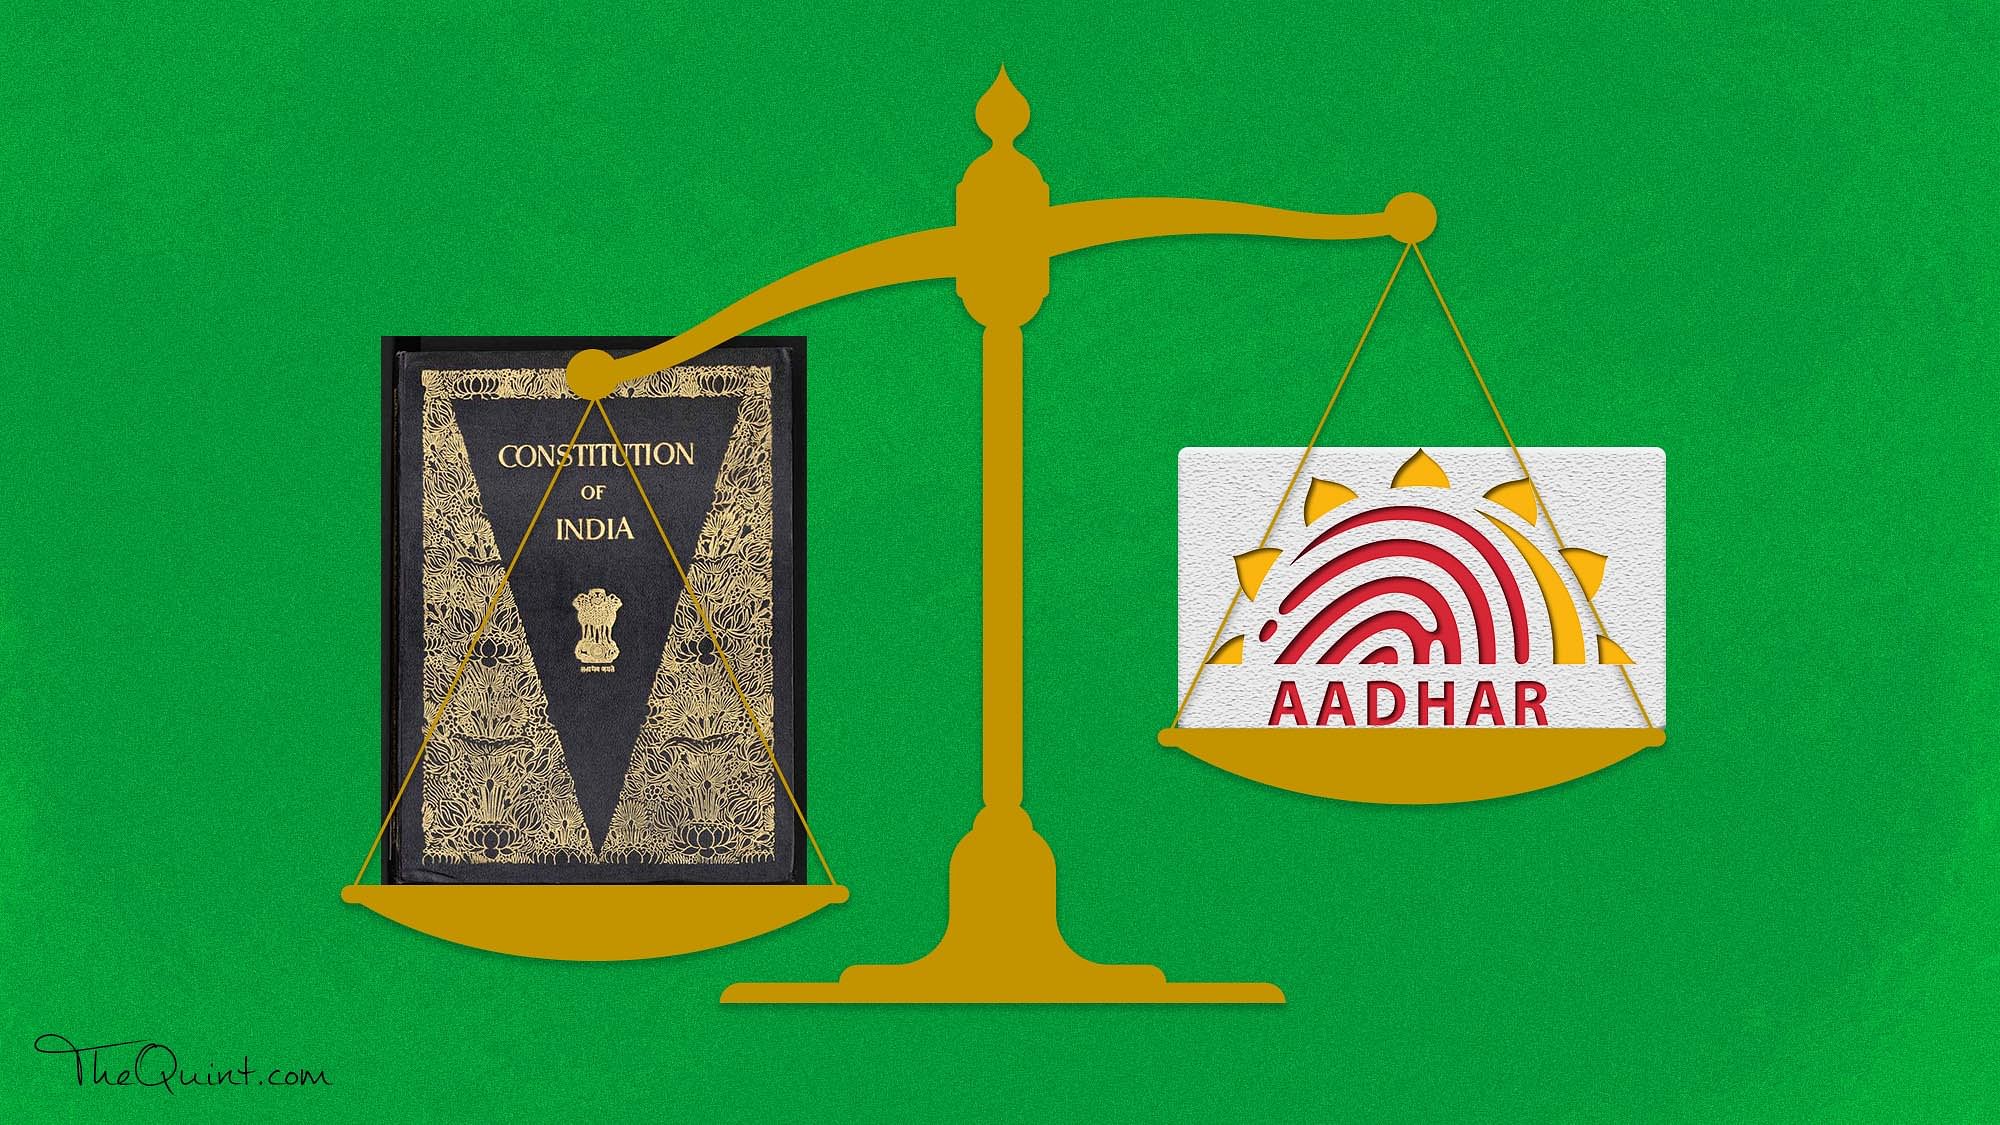 Does the Aadhaar scheme violate the Constitution?